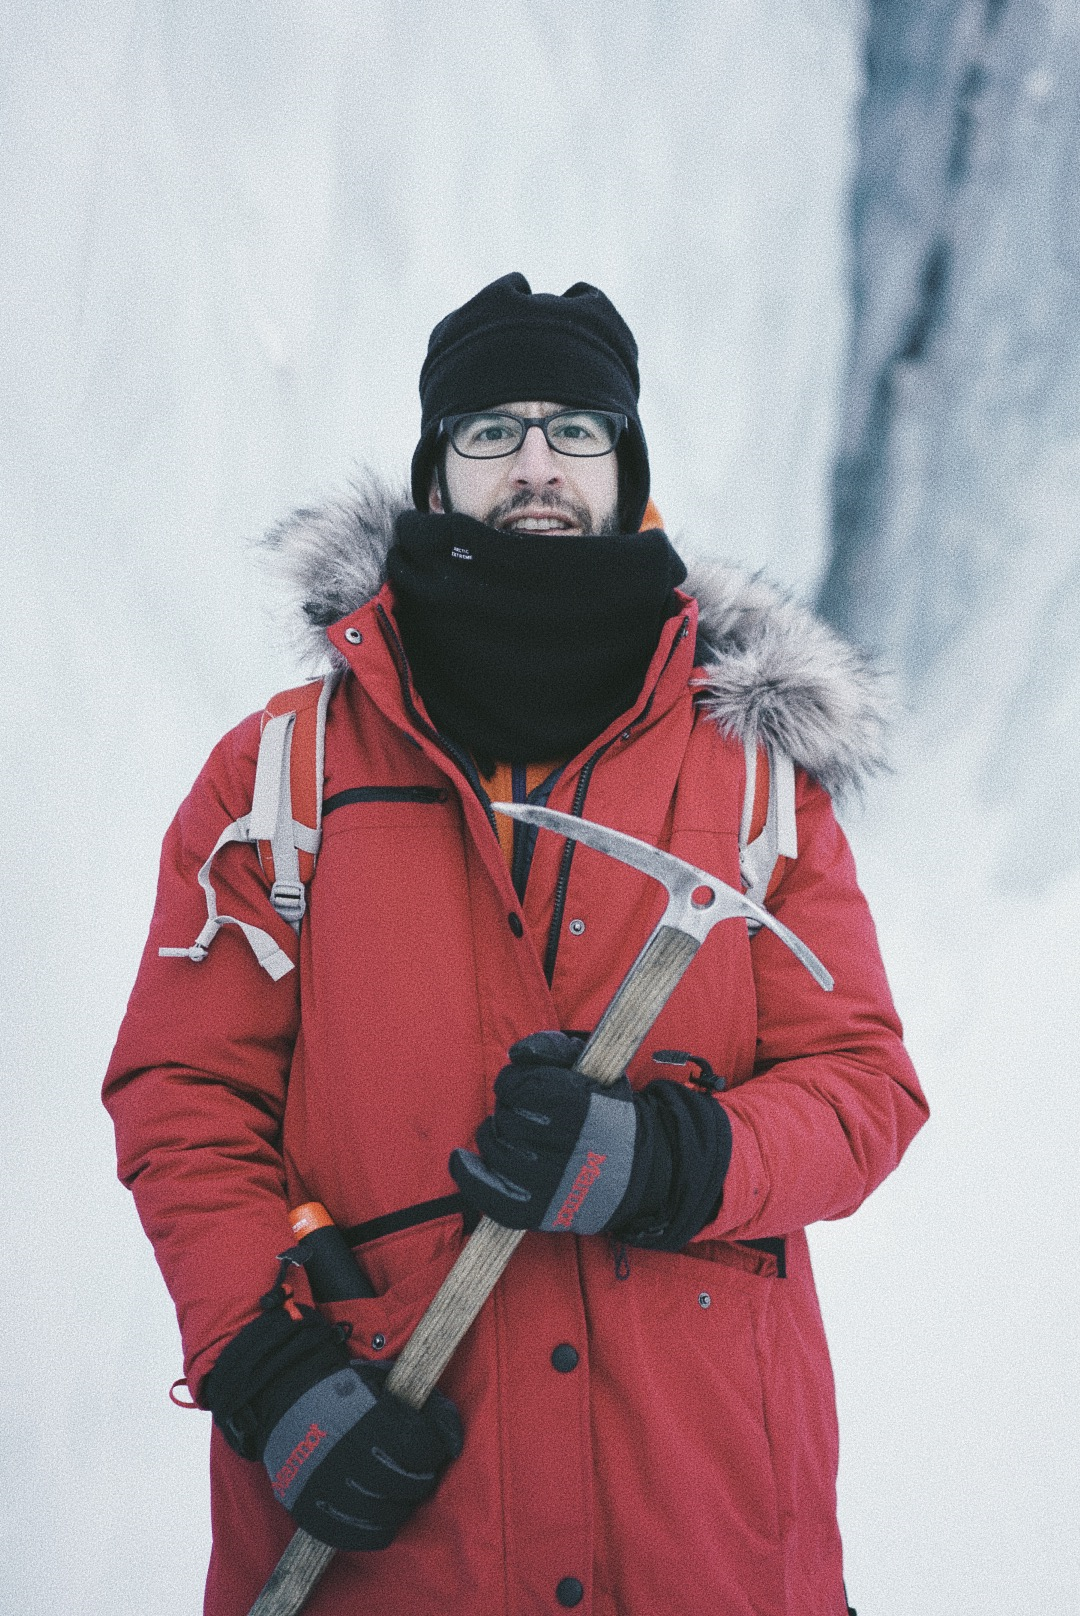 Stephen Bugno Alaska tour guide